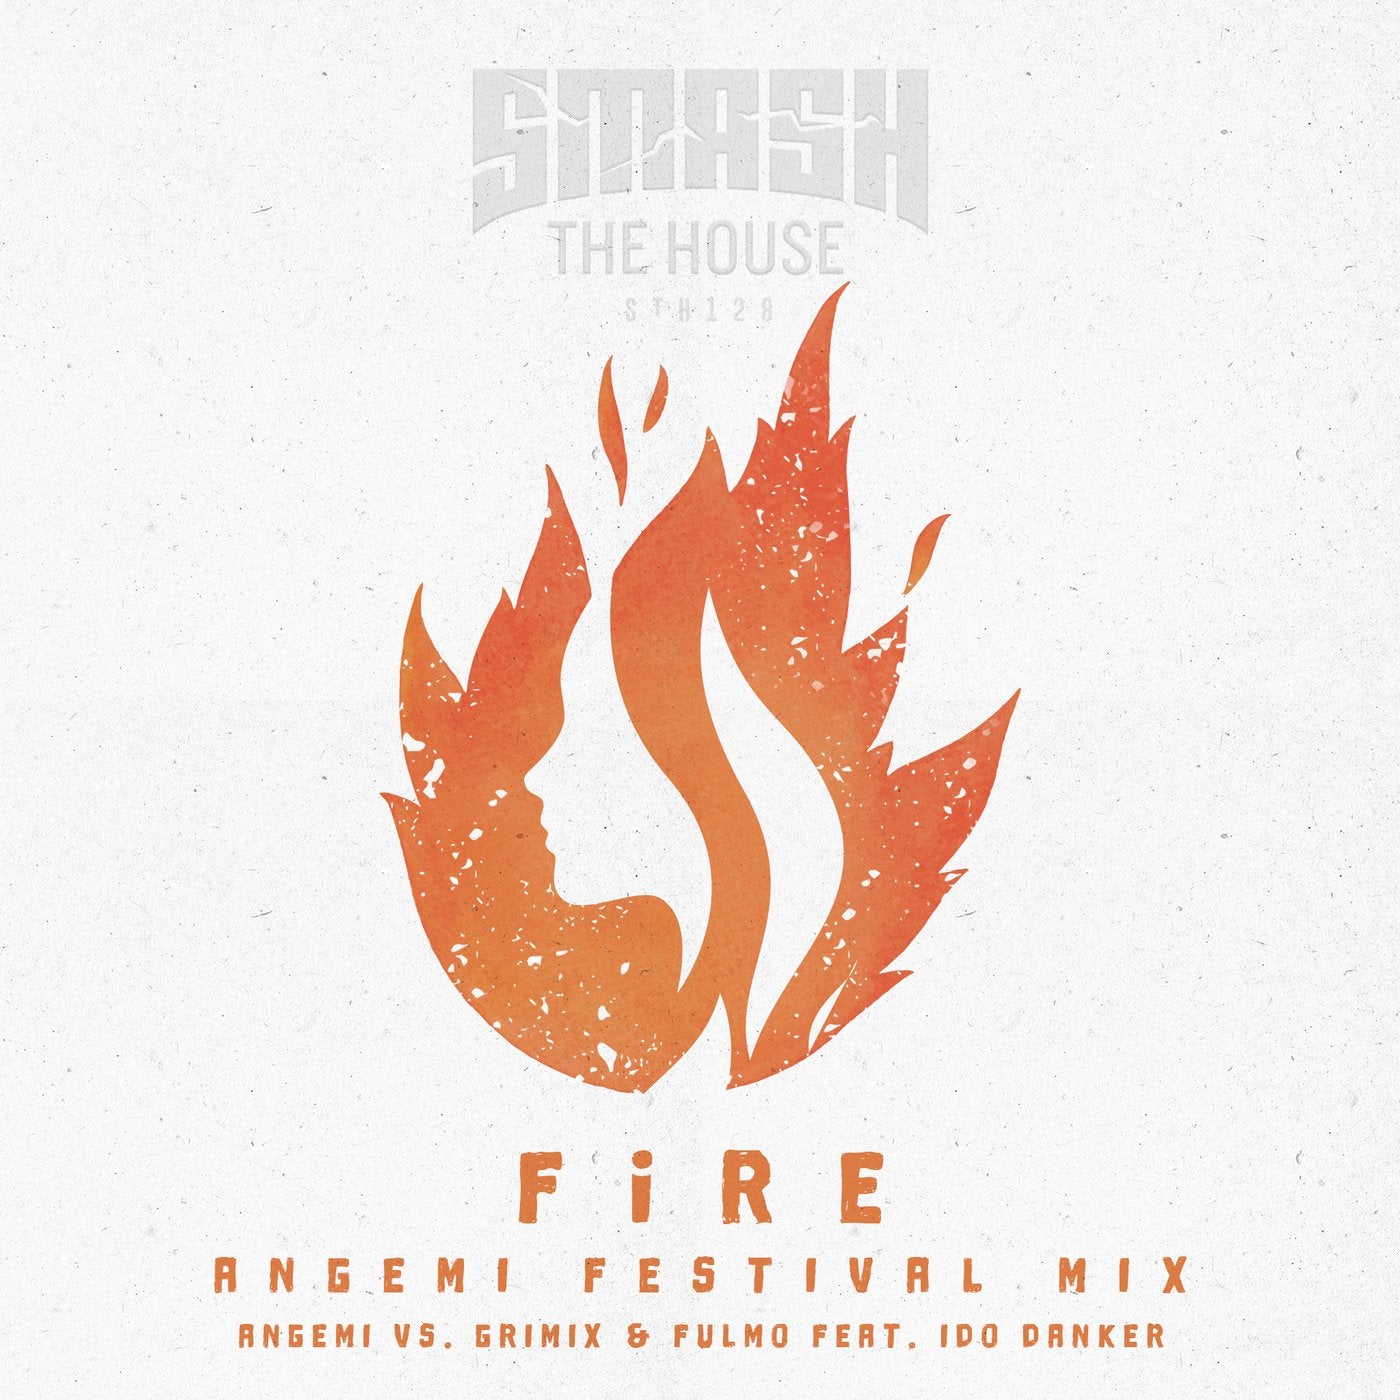 Fire (ANGEMI Festival Mix)